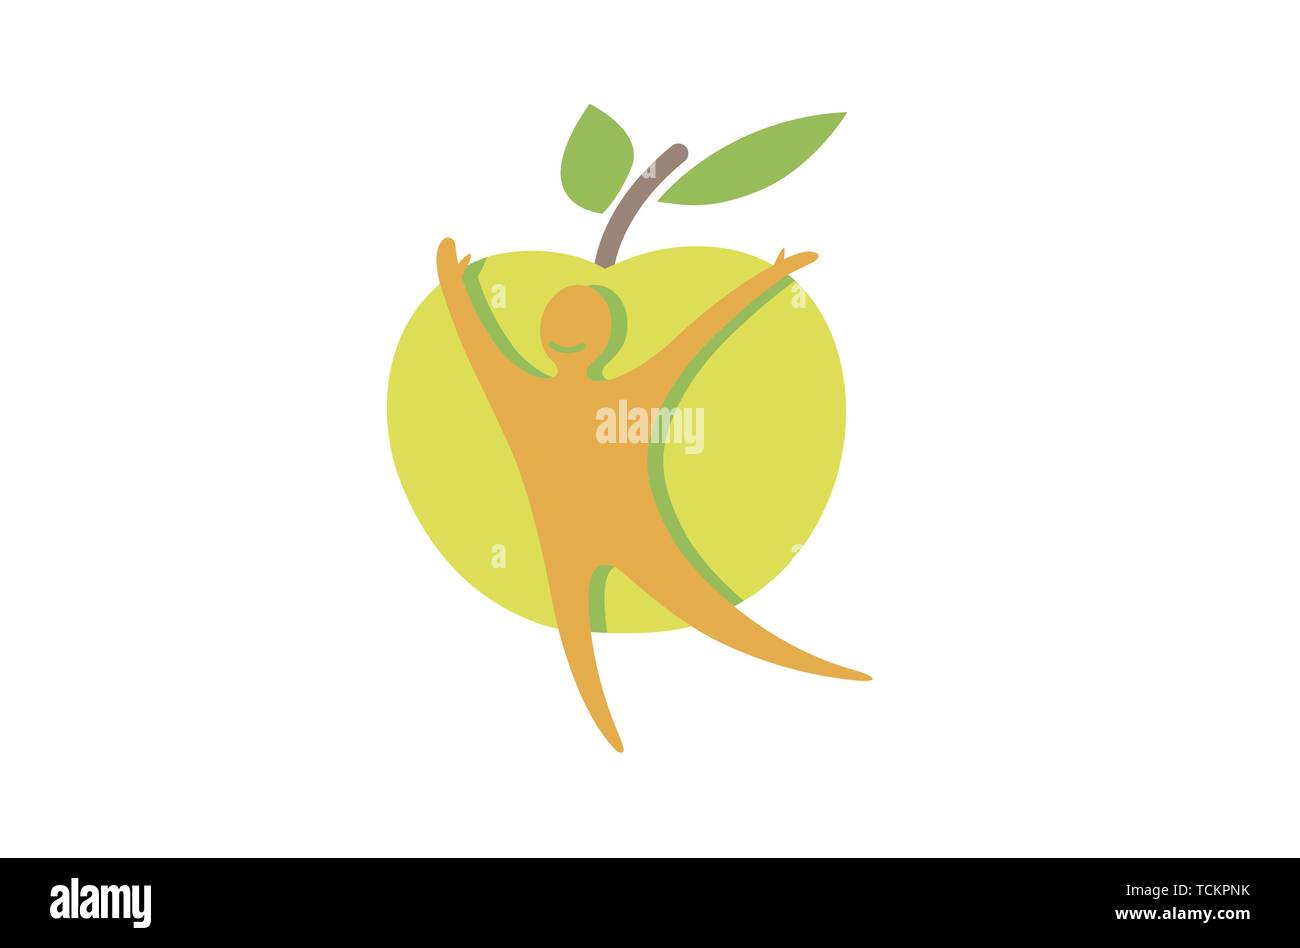 Creative Green Apple Healthy Body Logo Design Illustration Stock Vector